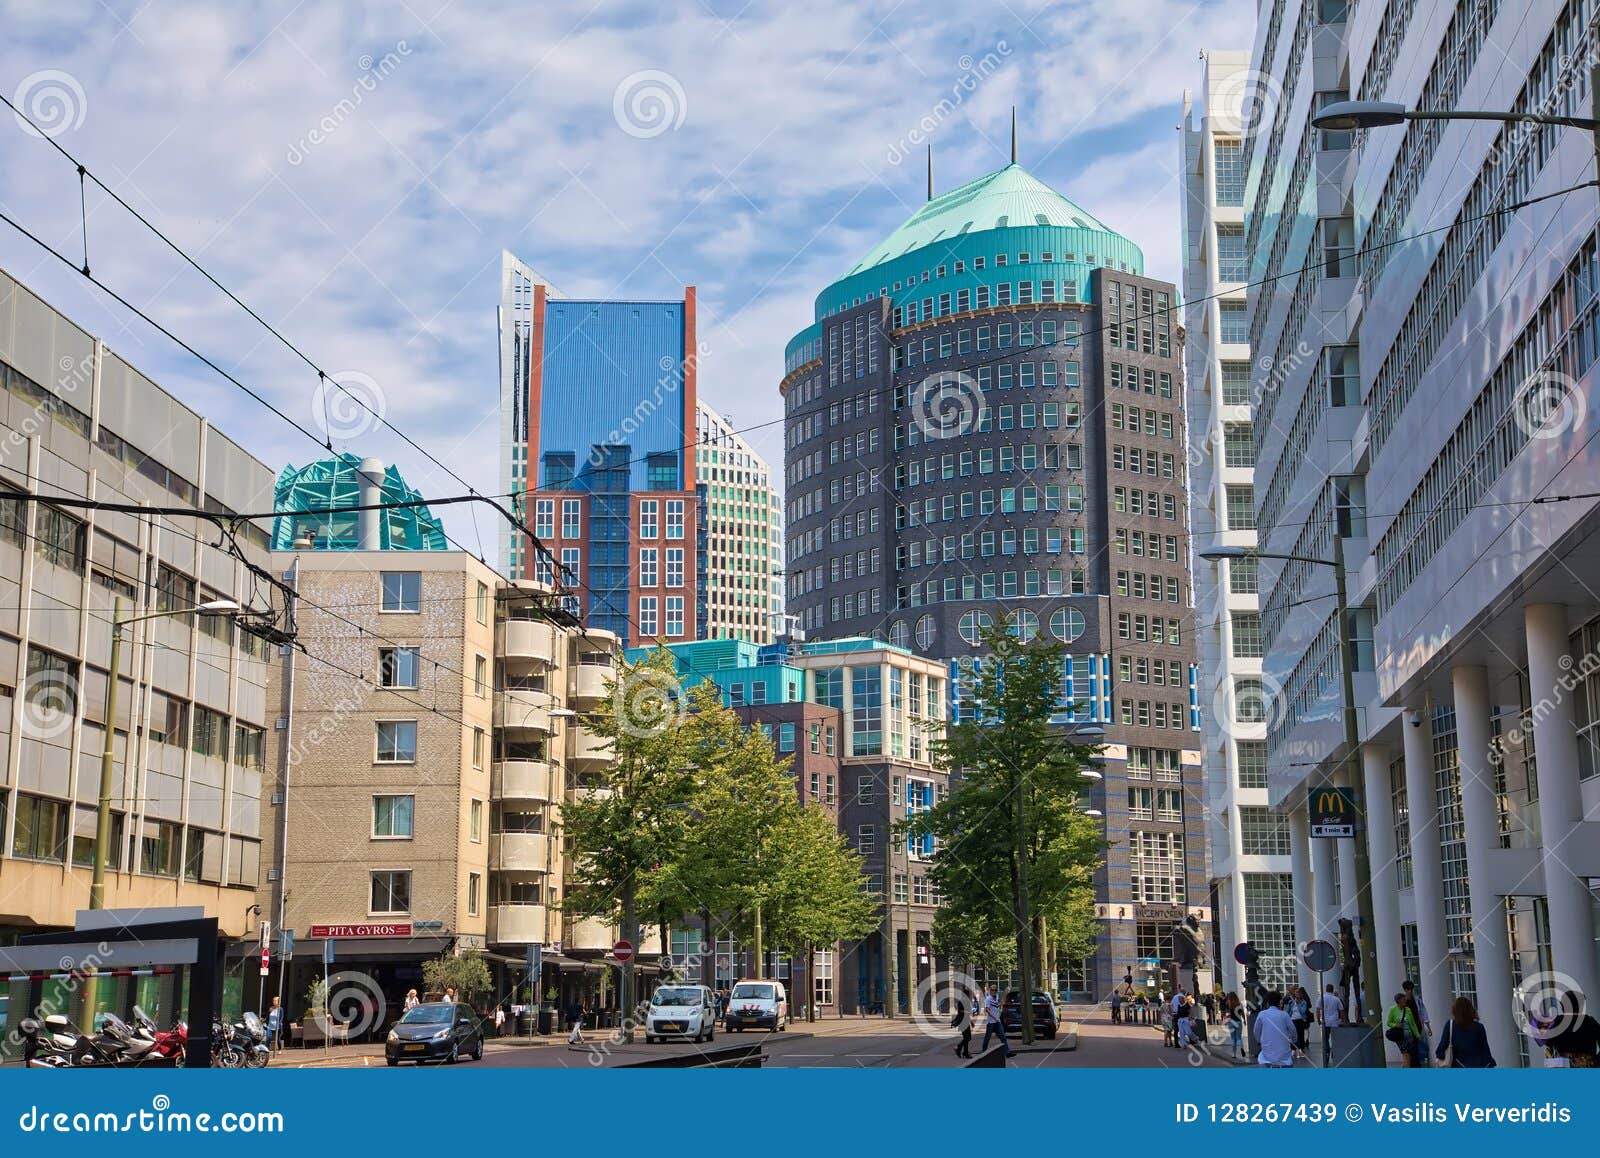 Modern Buildings  In Den  Haag  City Center Netherlands 